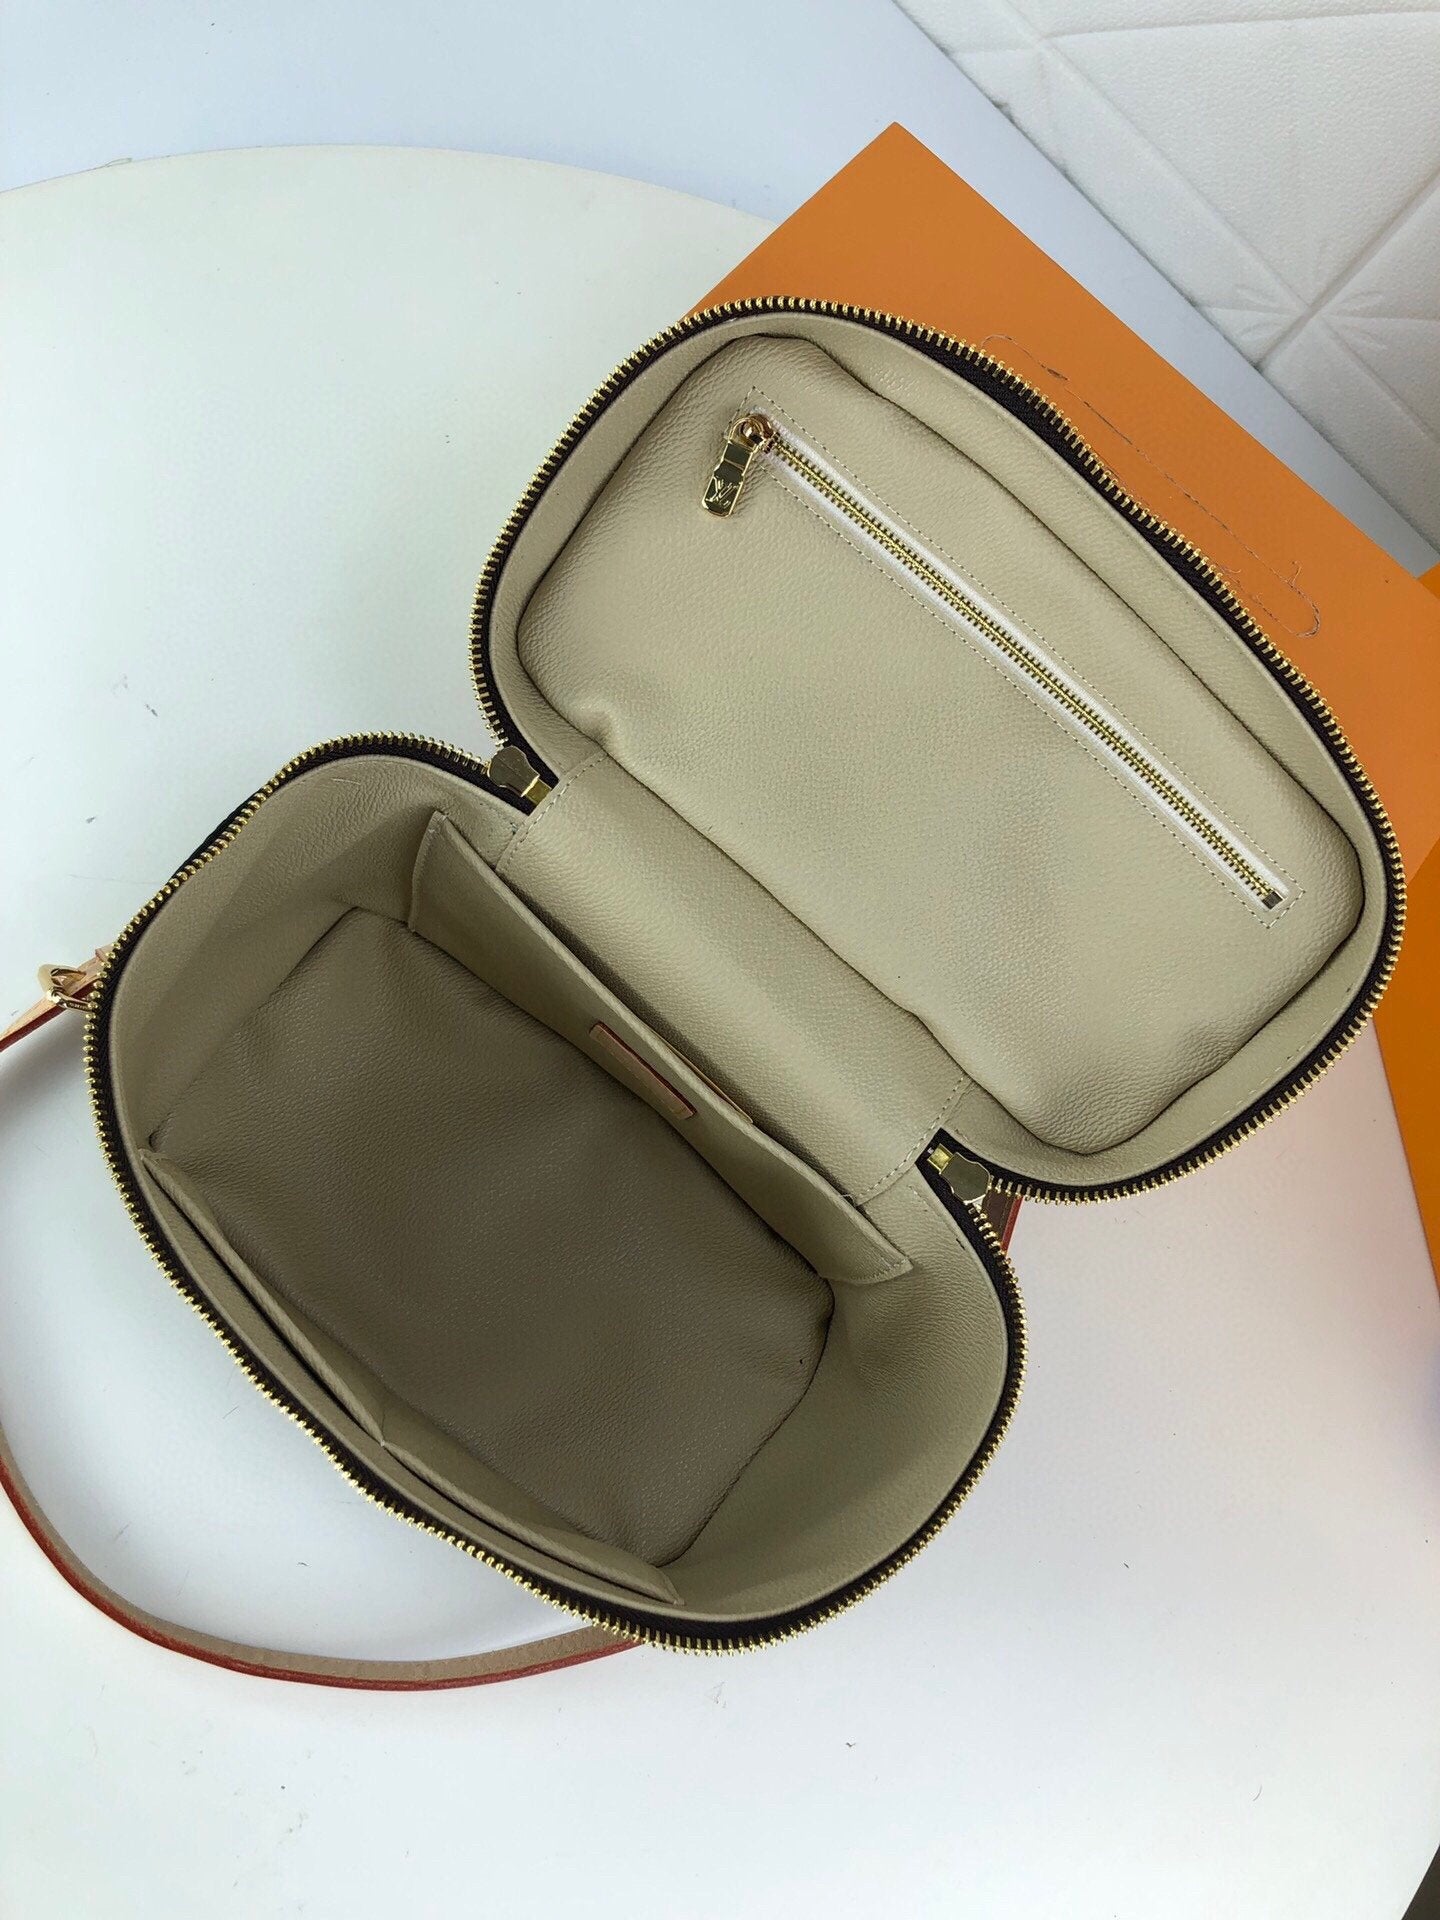 EI - Top Handbags LUV 023